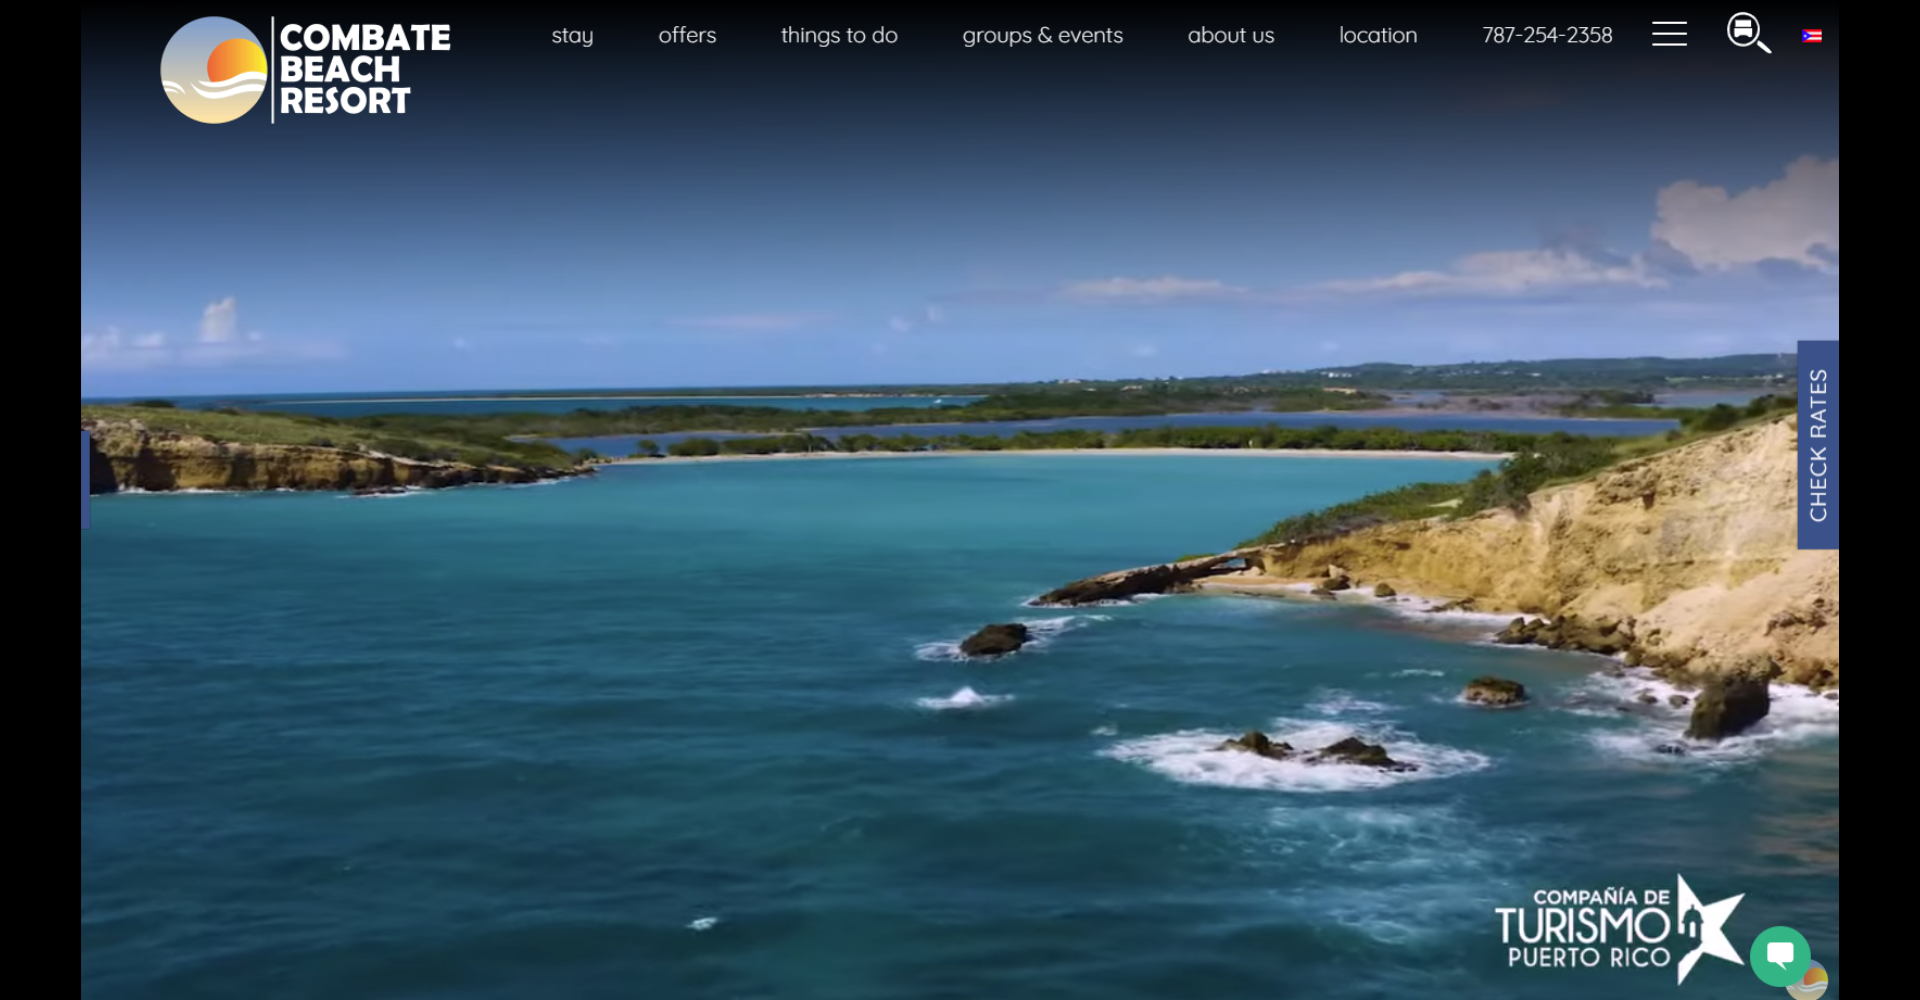 Homepage screenshot of Combate Beach Resort's website